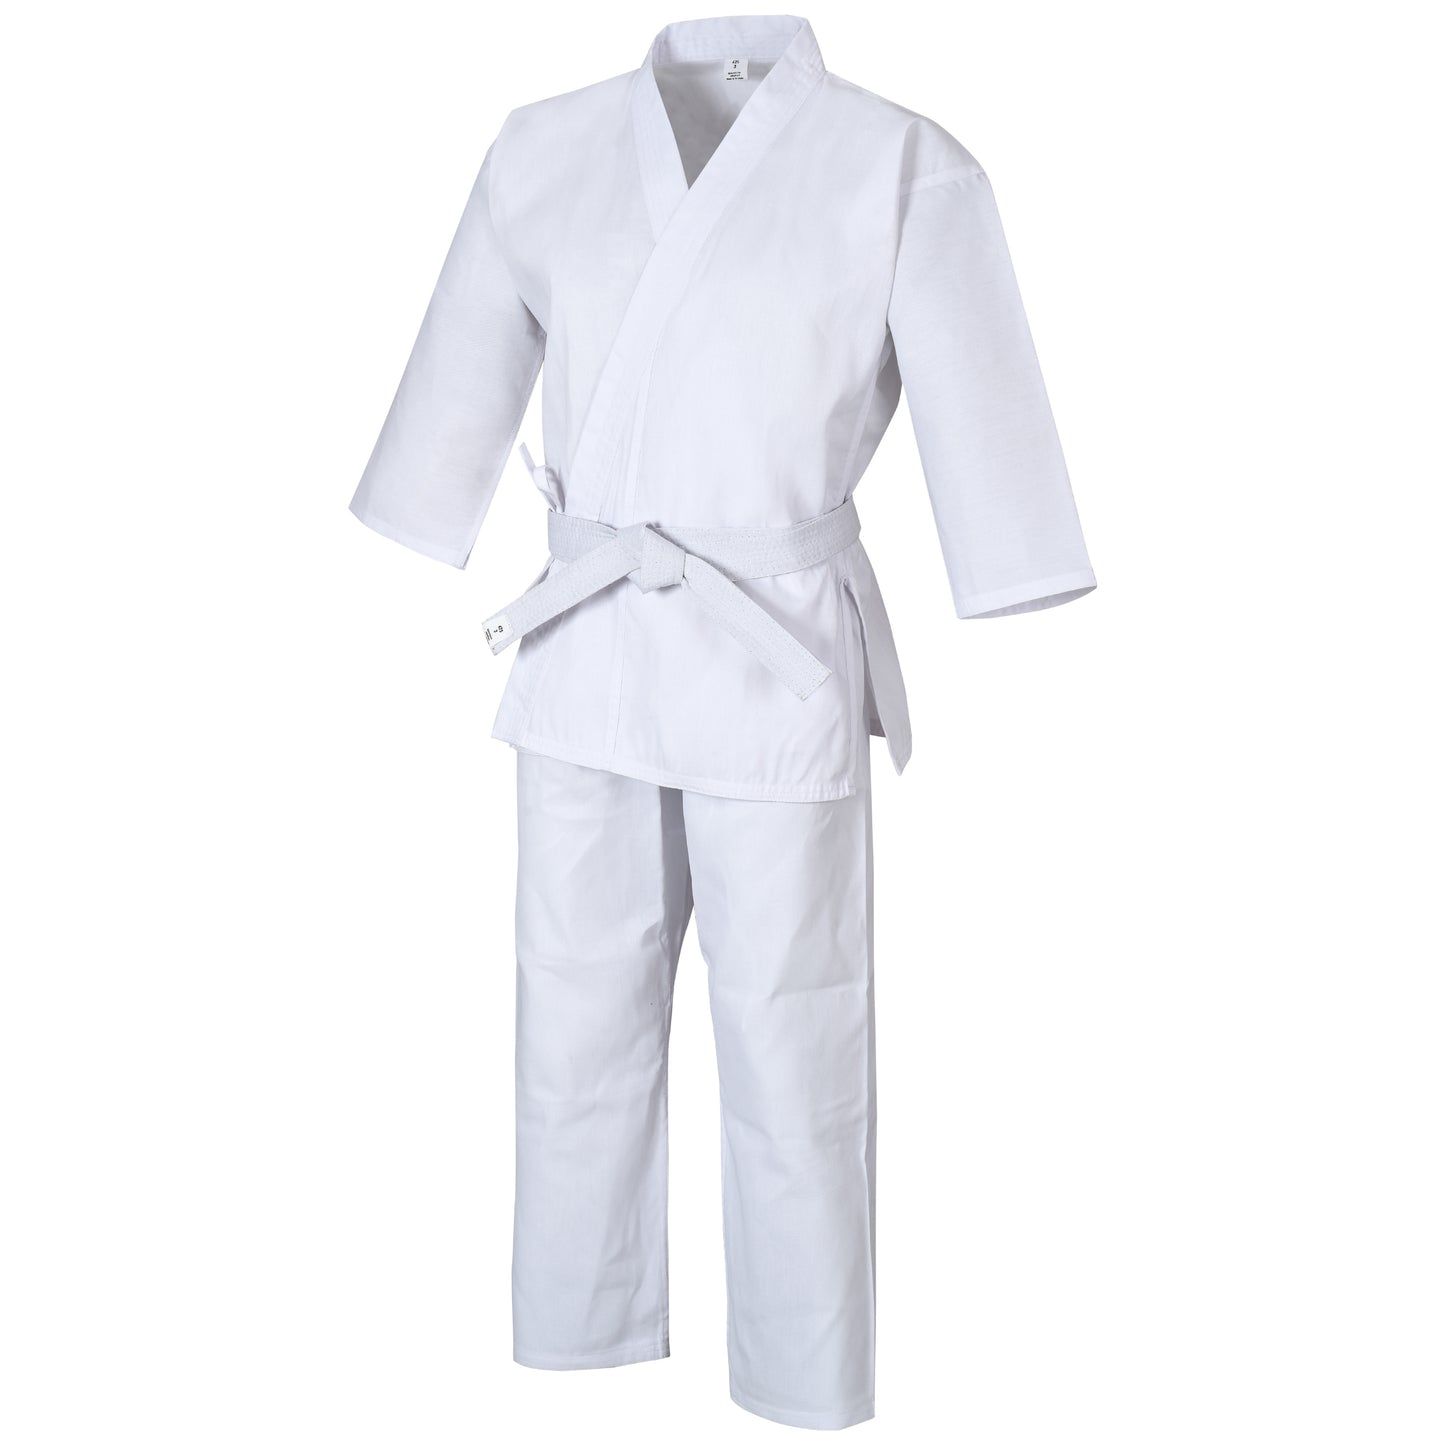 Karate gi Martial Arts 6-oz Elastic Drawstring Karate Uniform For Kids & Adult Lightweight Student Gi with Free Belt